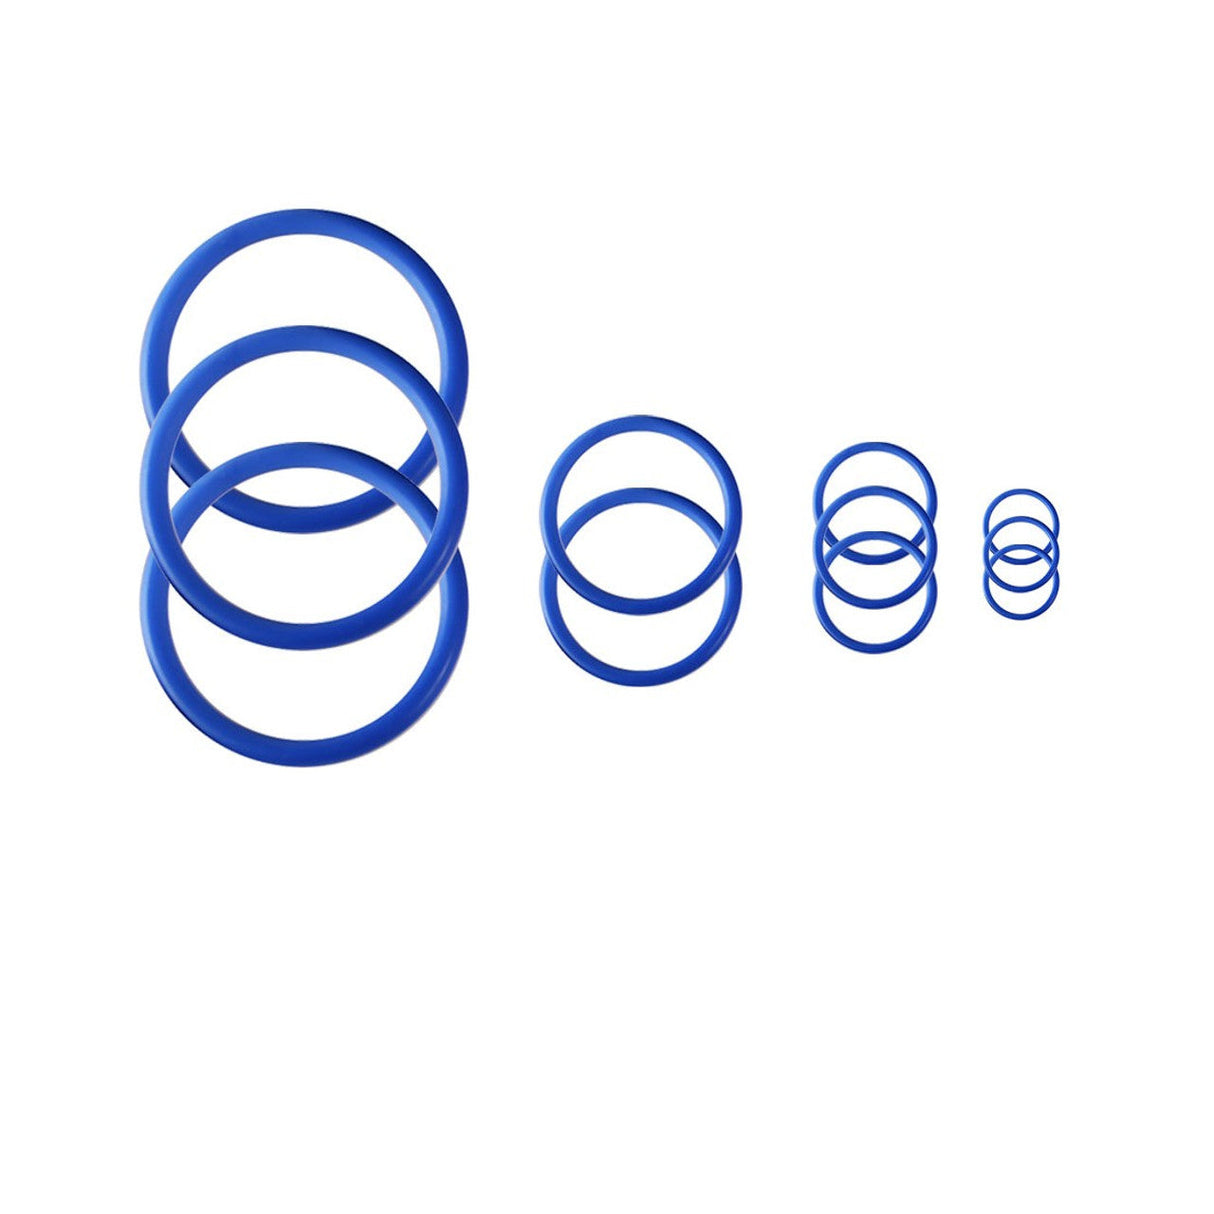 Storz & Bickel Crafty Vaporizer Blue Rubber Seal Ring Set on White Background